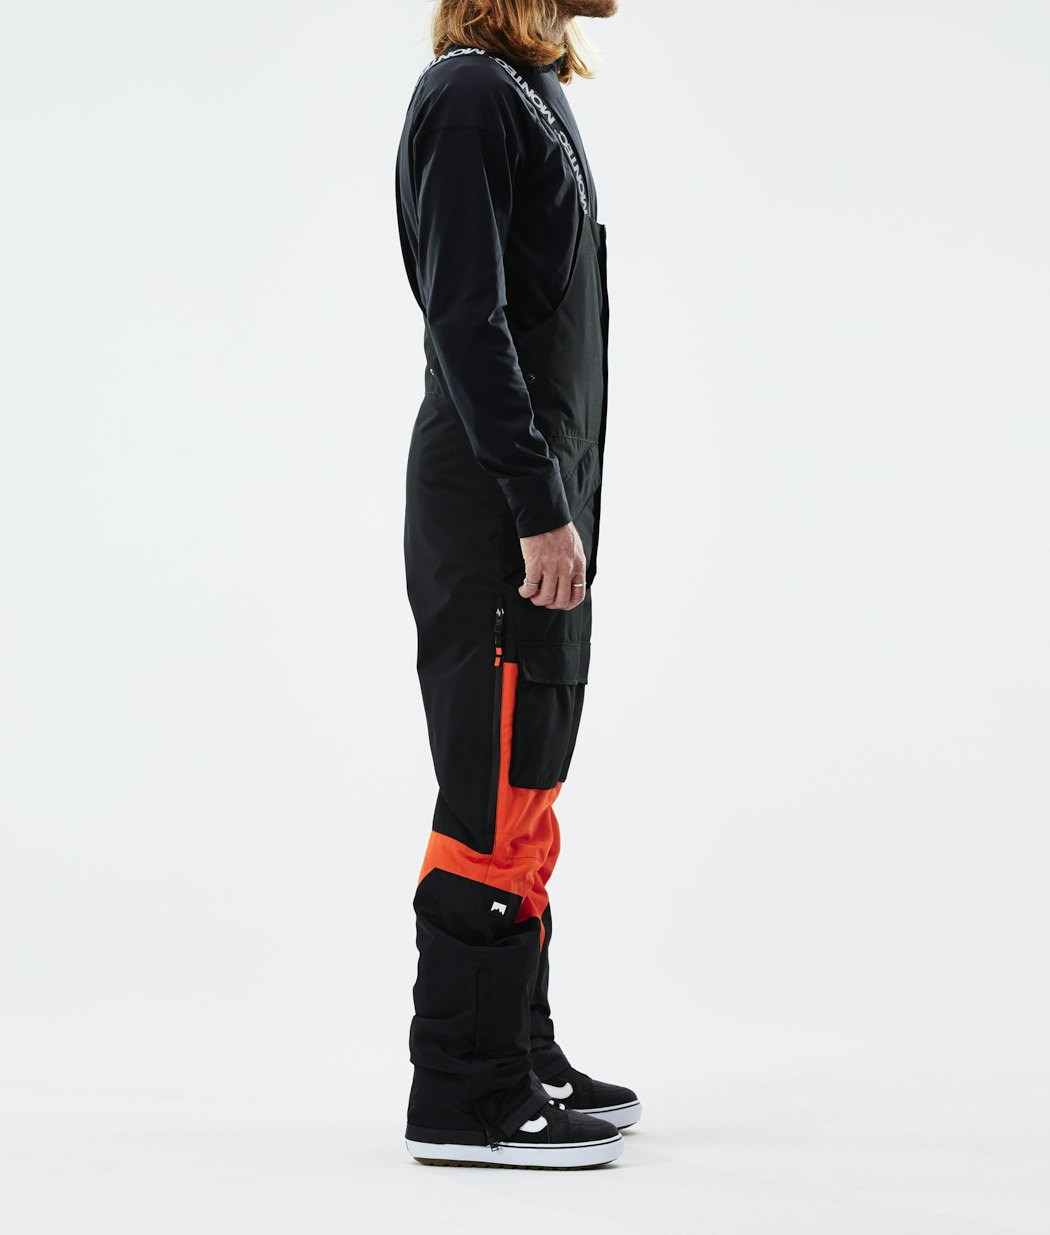 Fawk 2021 Snowboard Pants Men Black/Orange Renewed